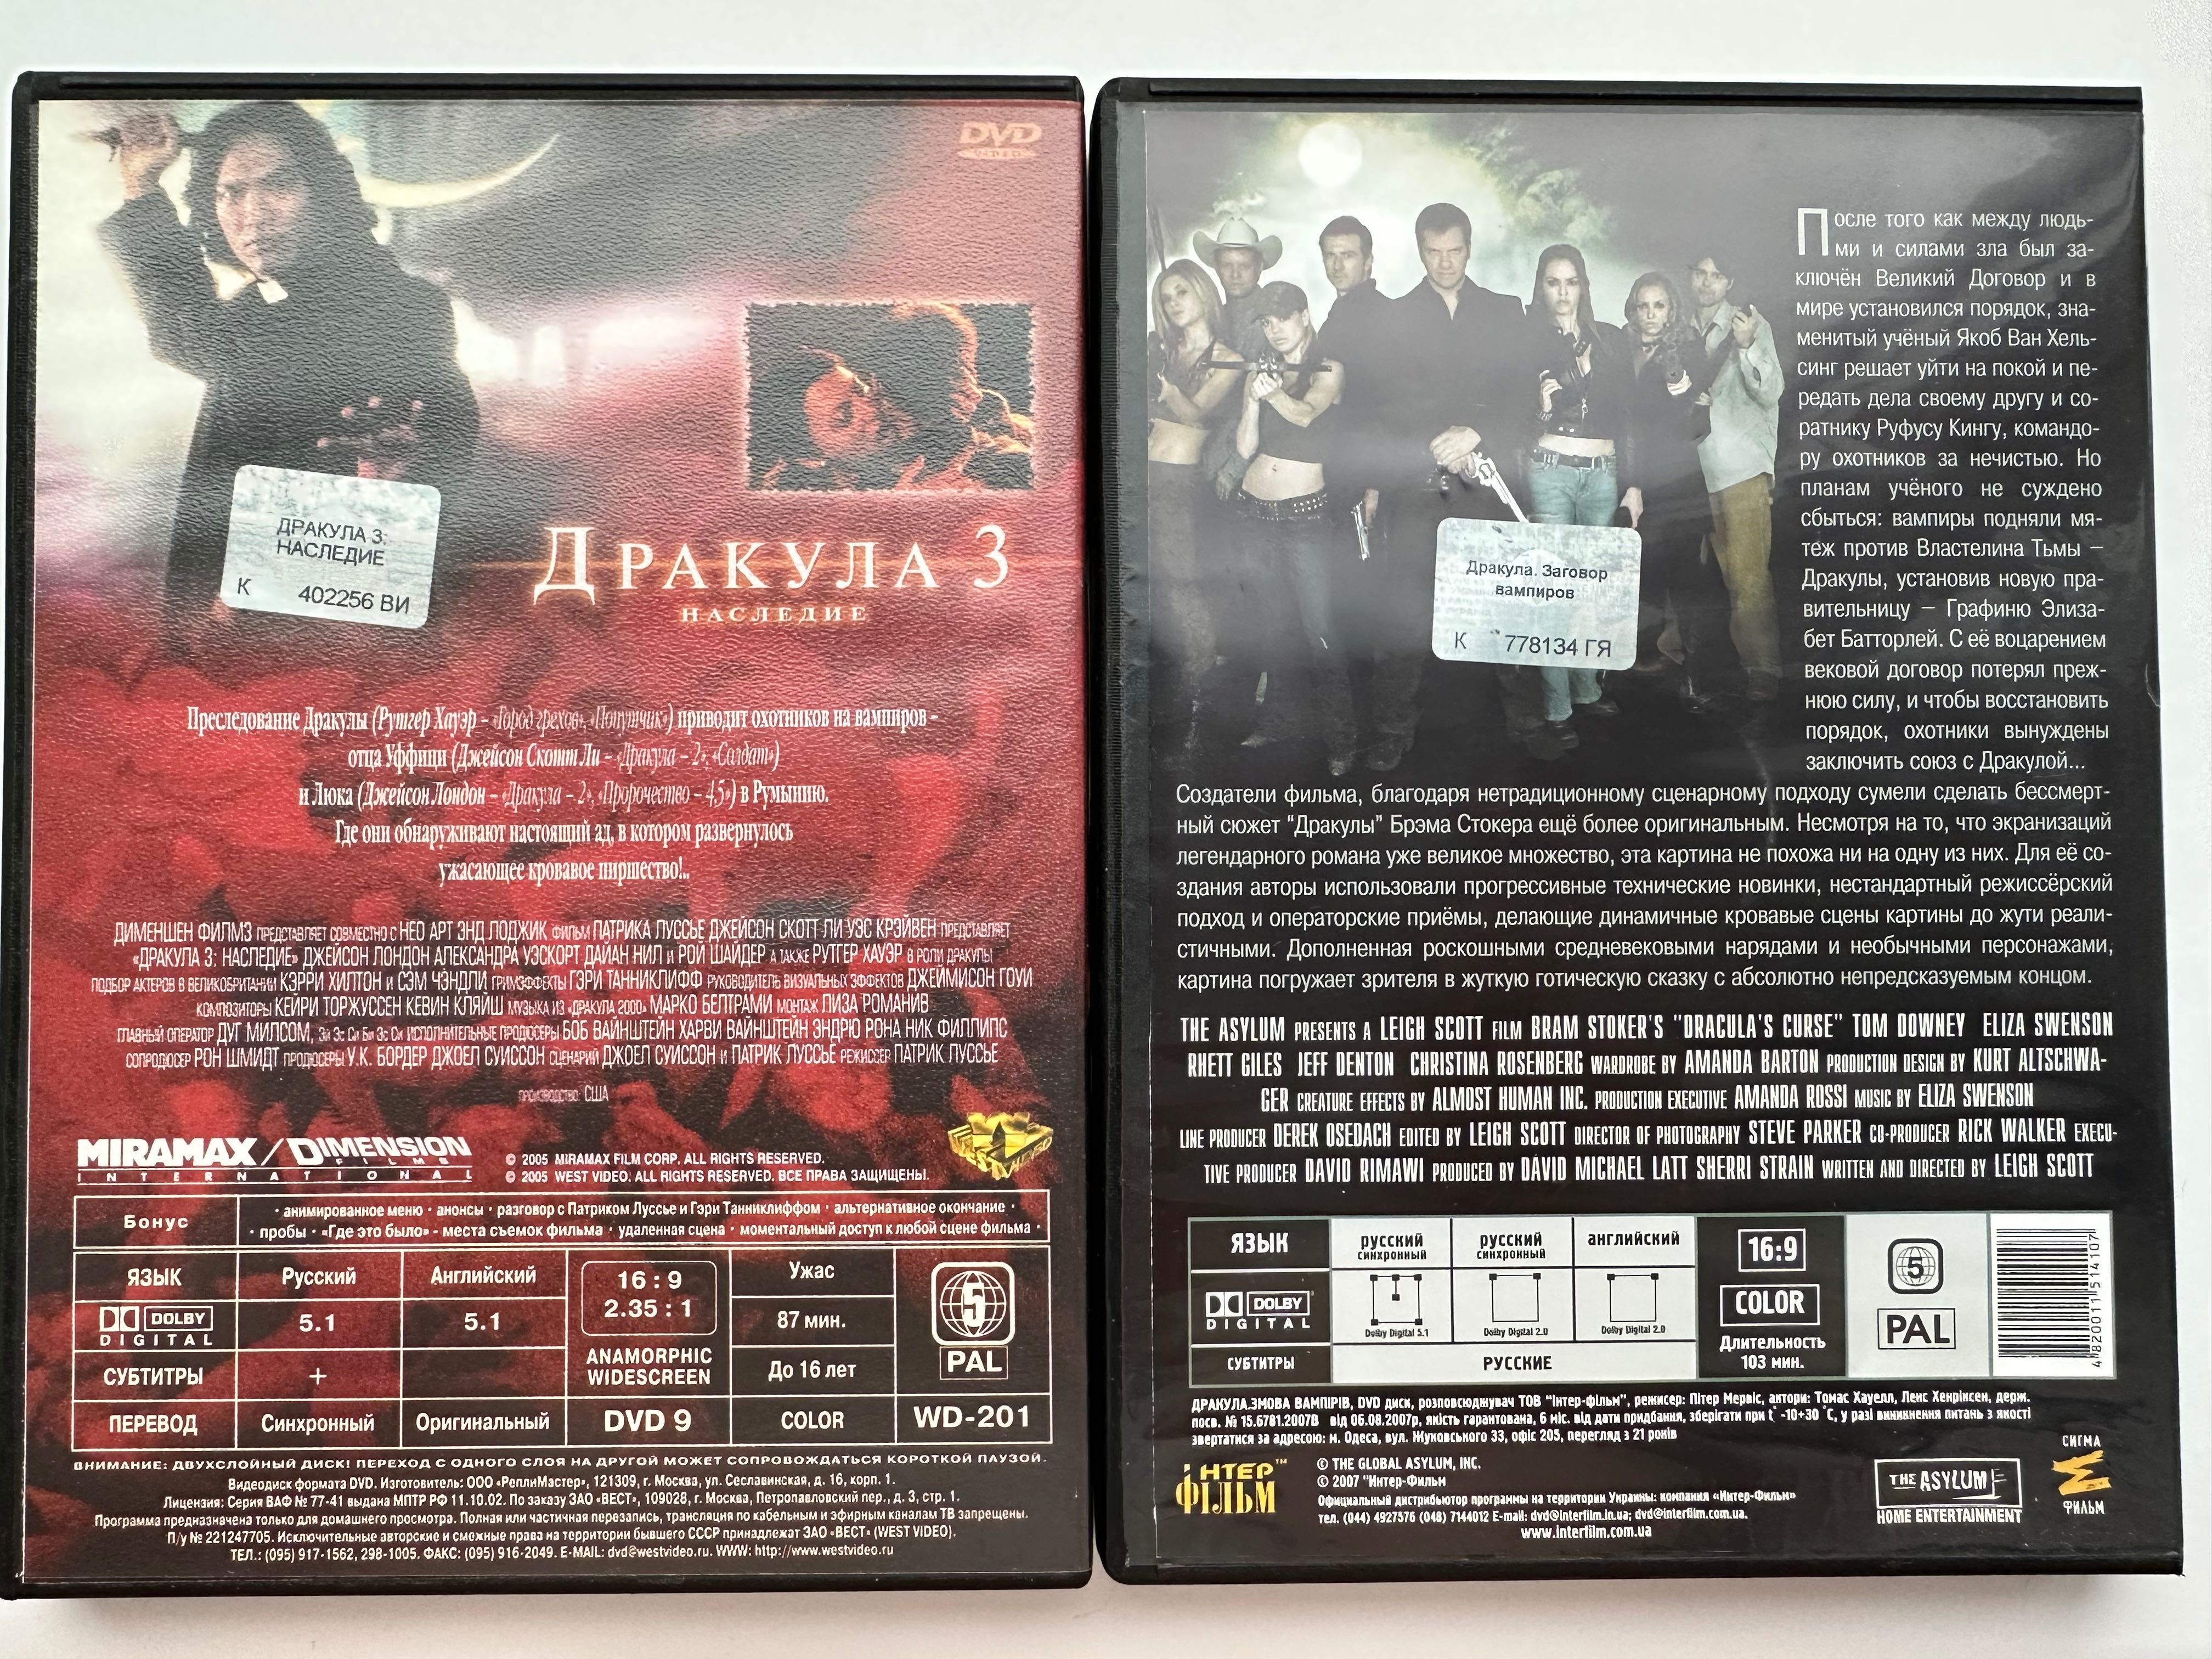 DVD Дракула, Дракула 3